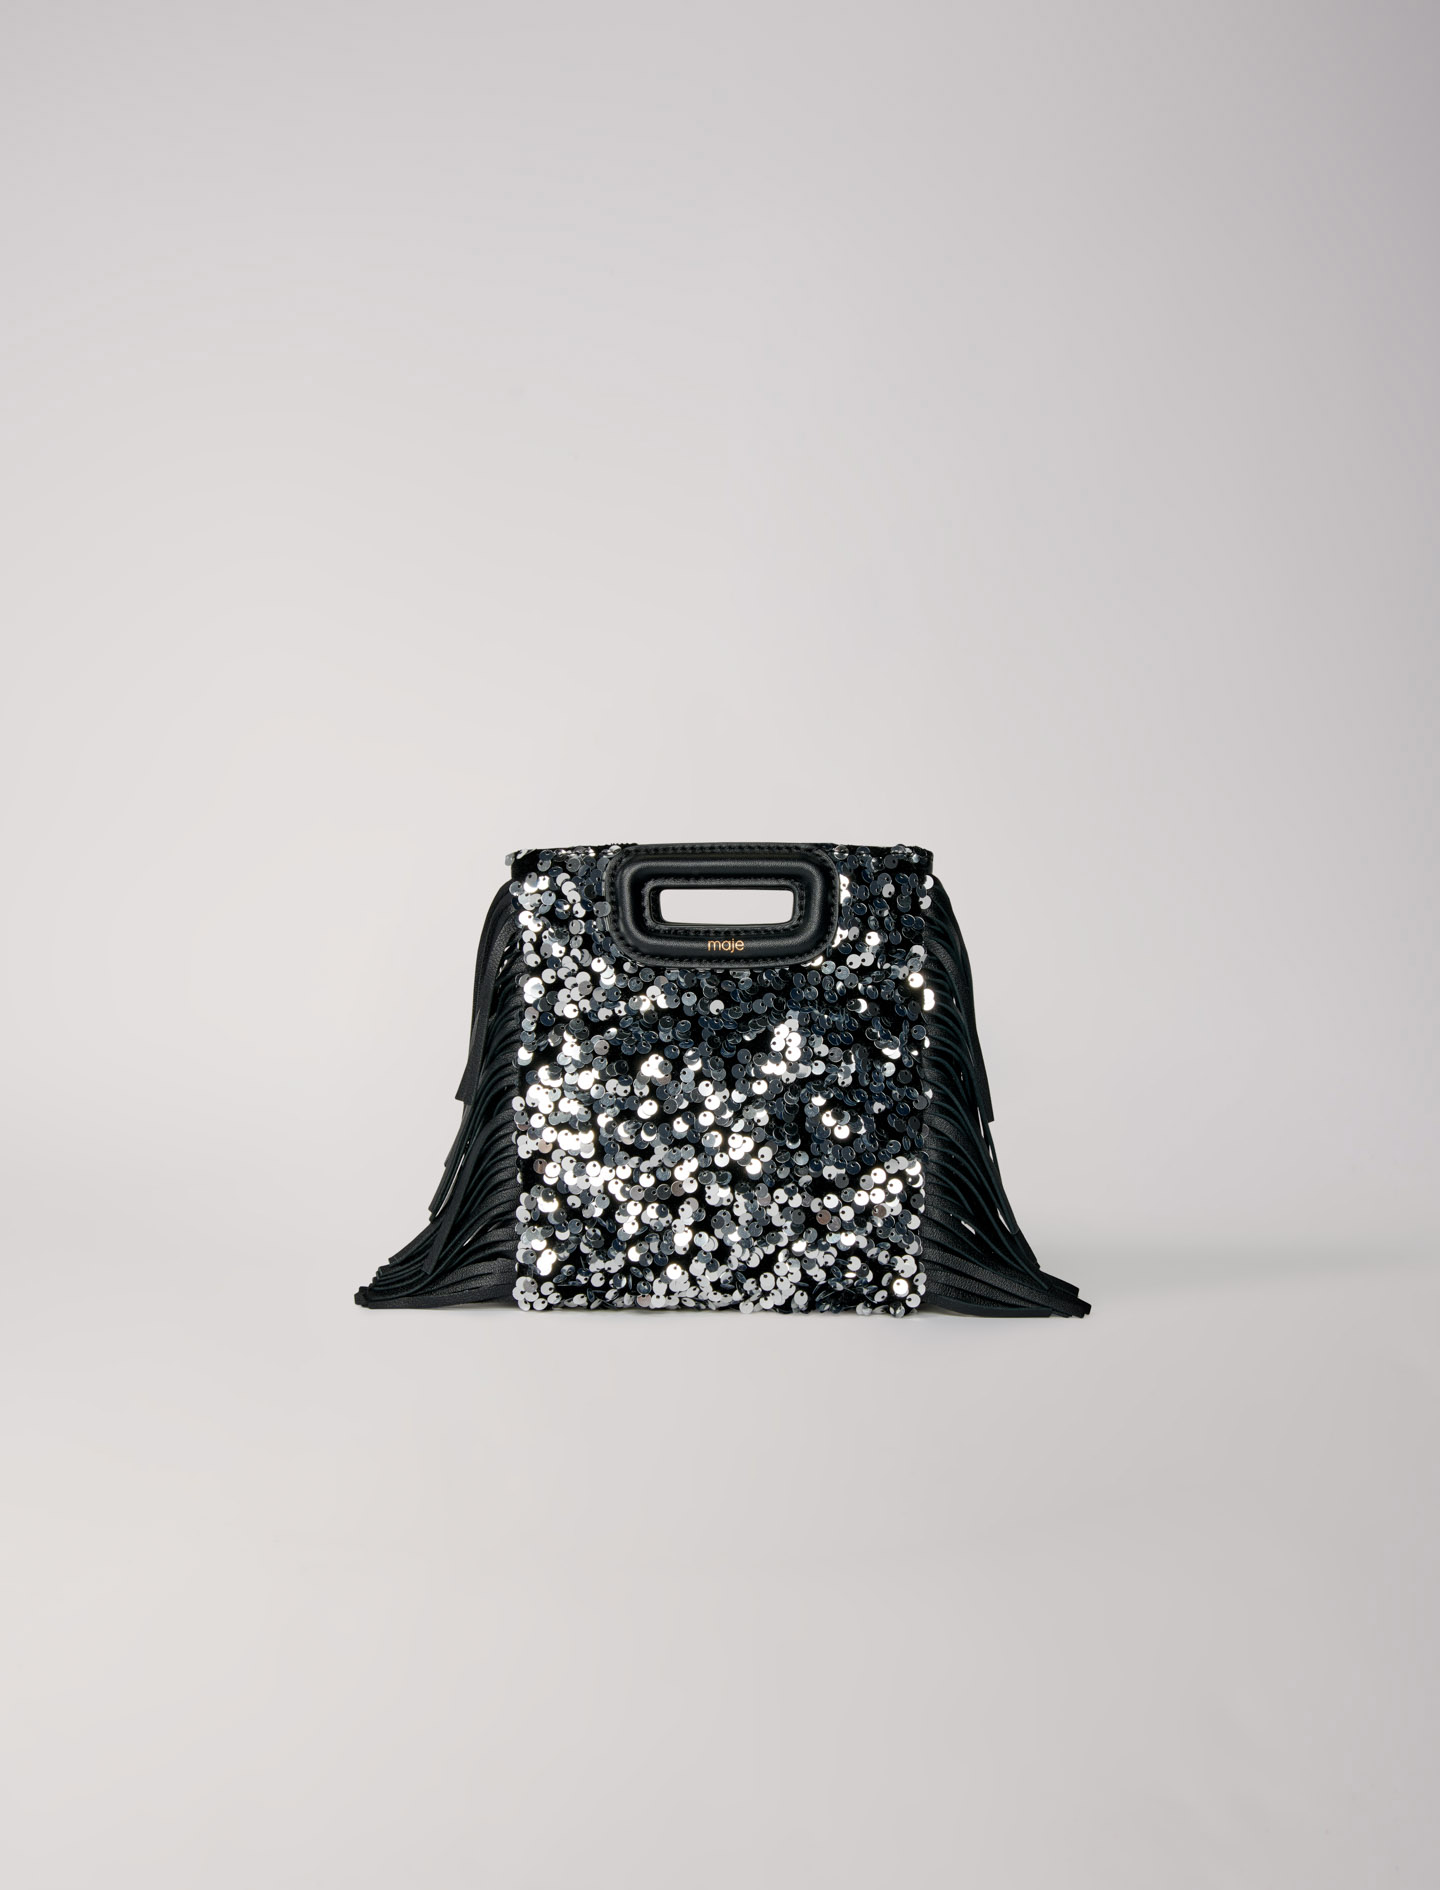 Maje Woman's polyester, Sequin mini M bag for Fall/Winter, in color Black / Black